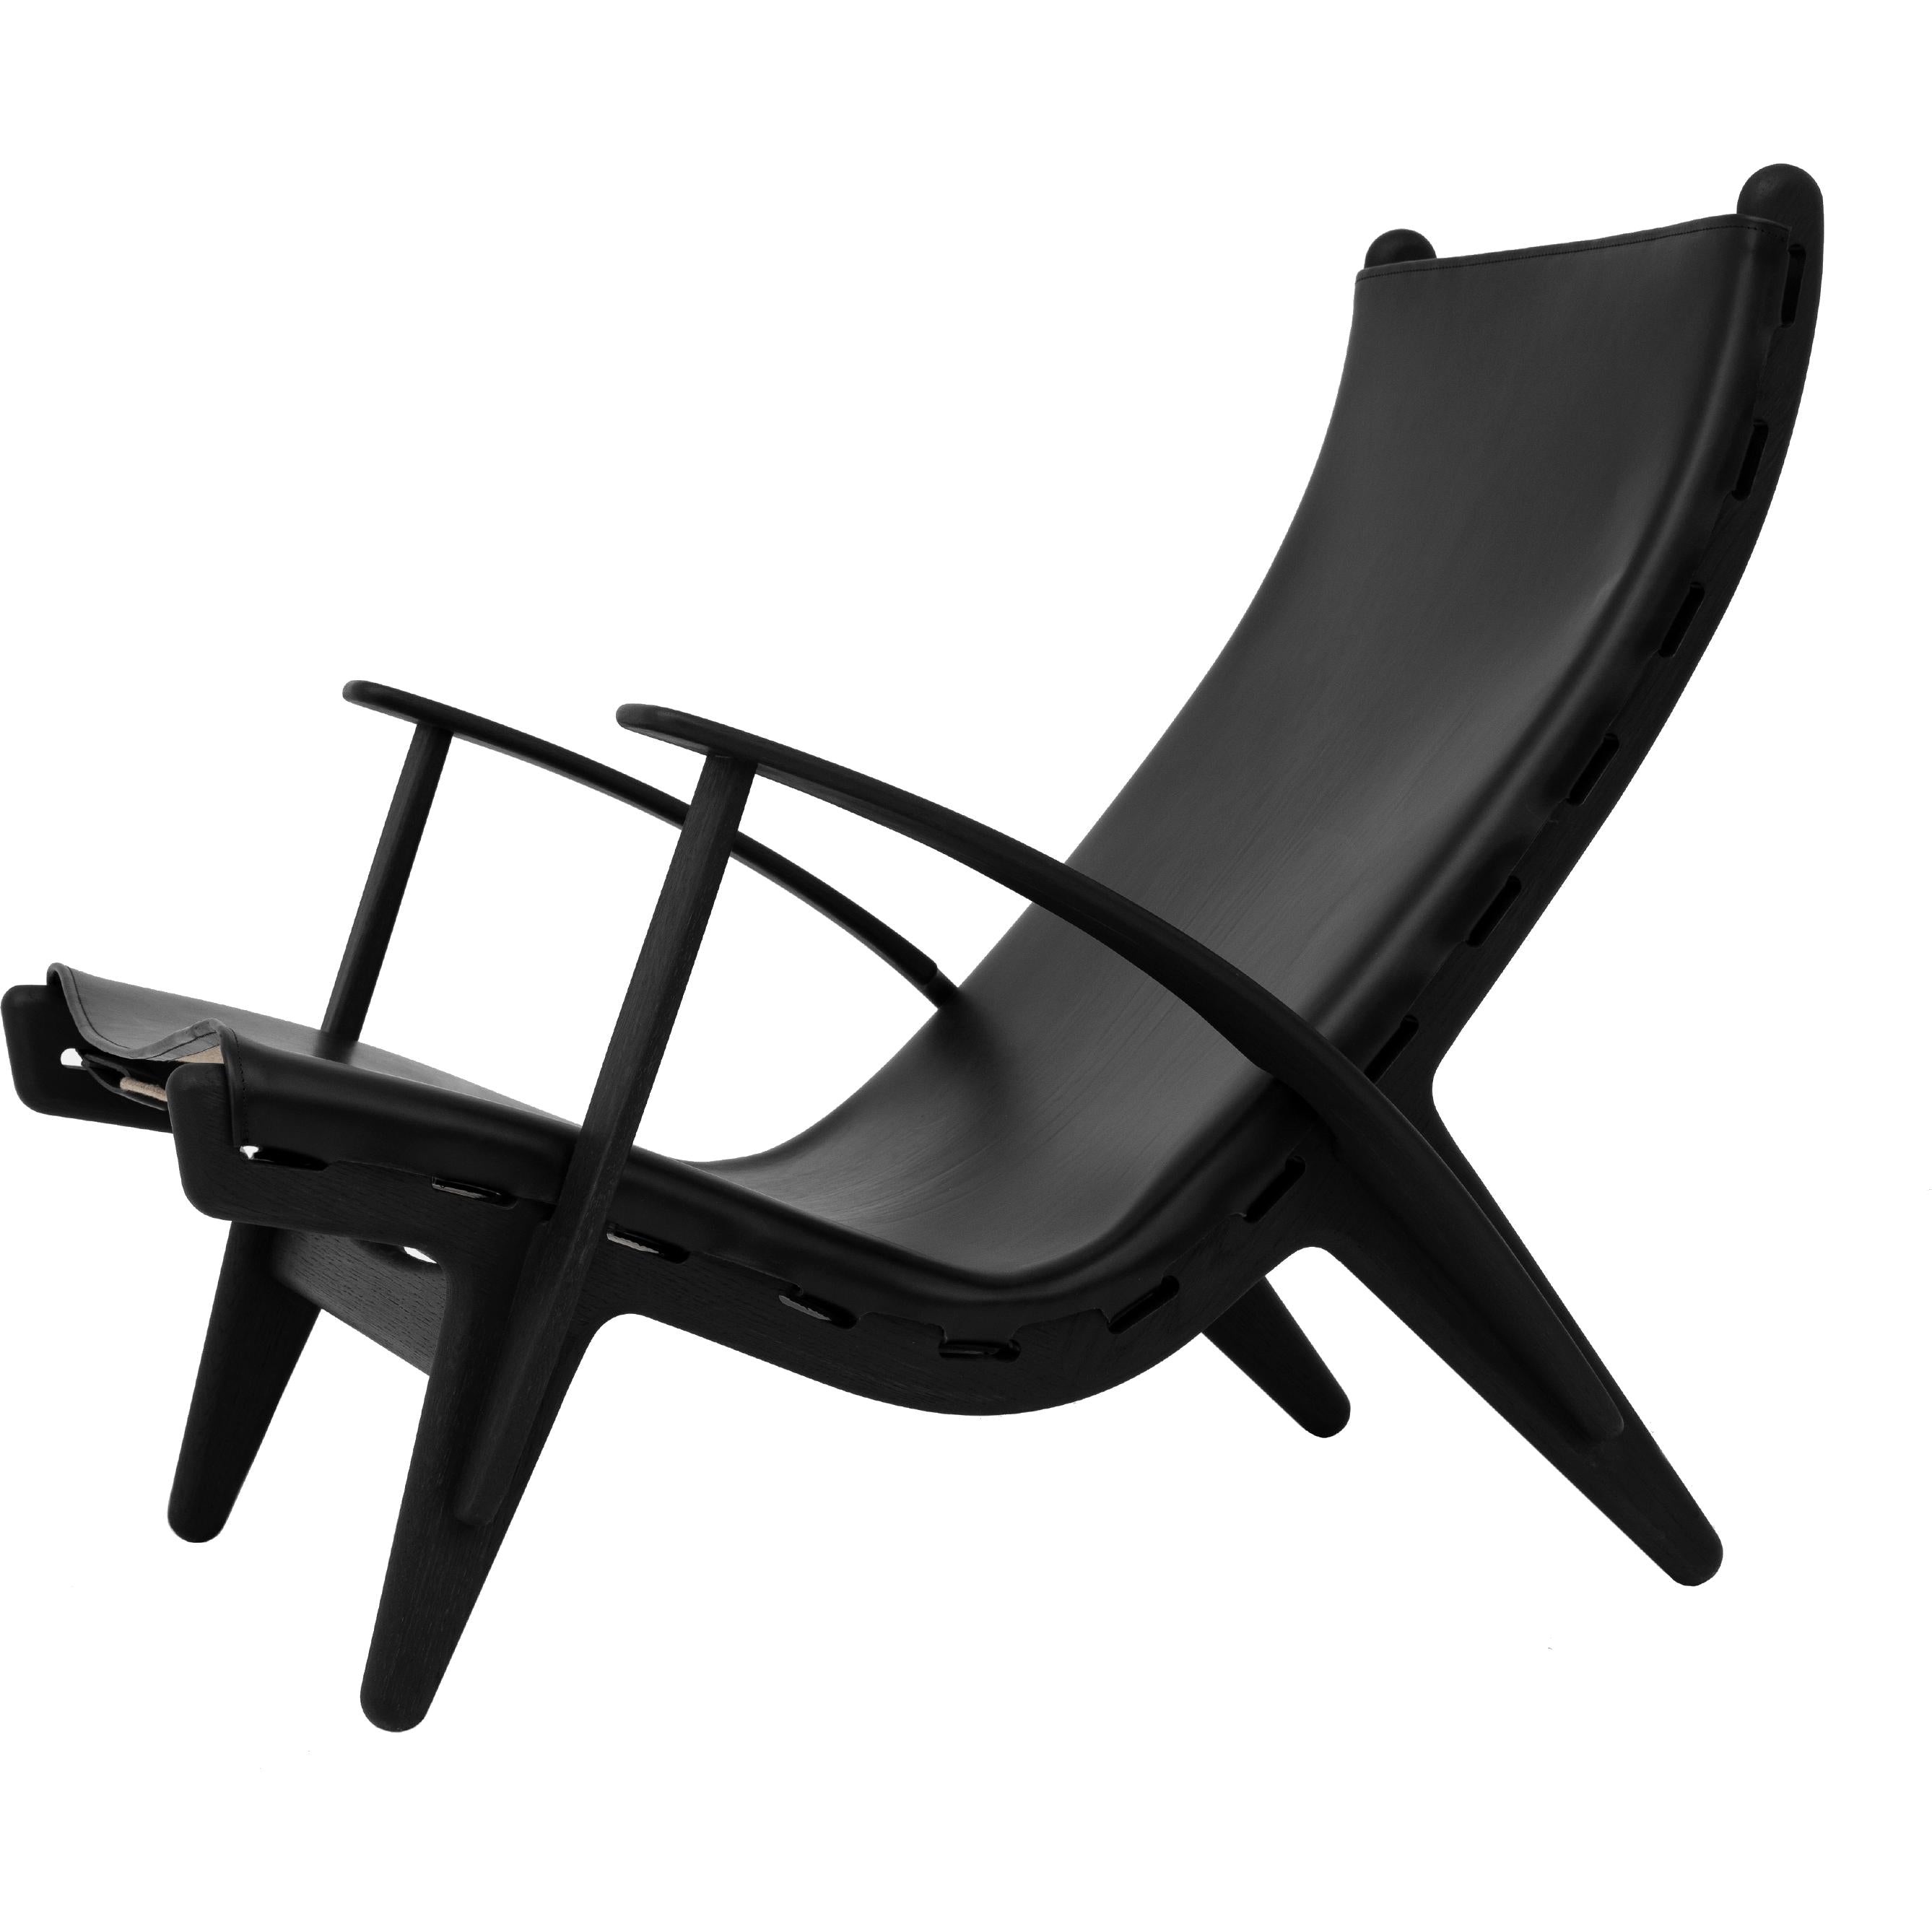 Klassik Studio PV King's stoel Black Oak bevlekt, zwart leer